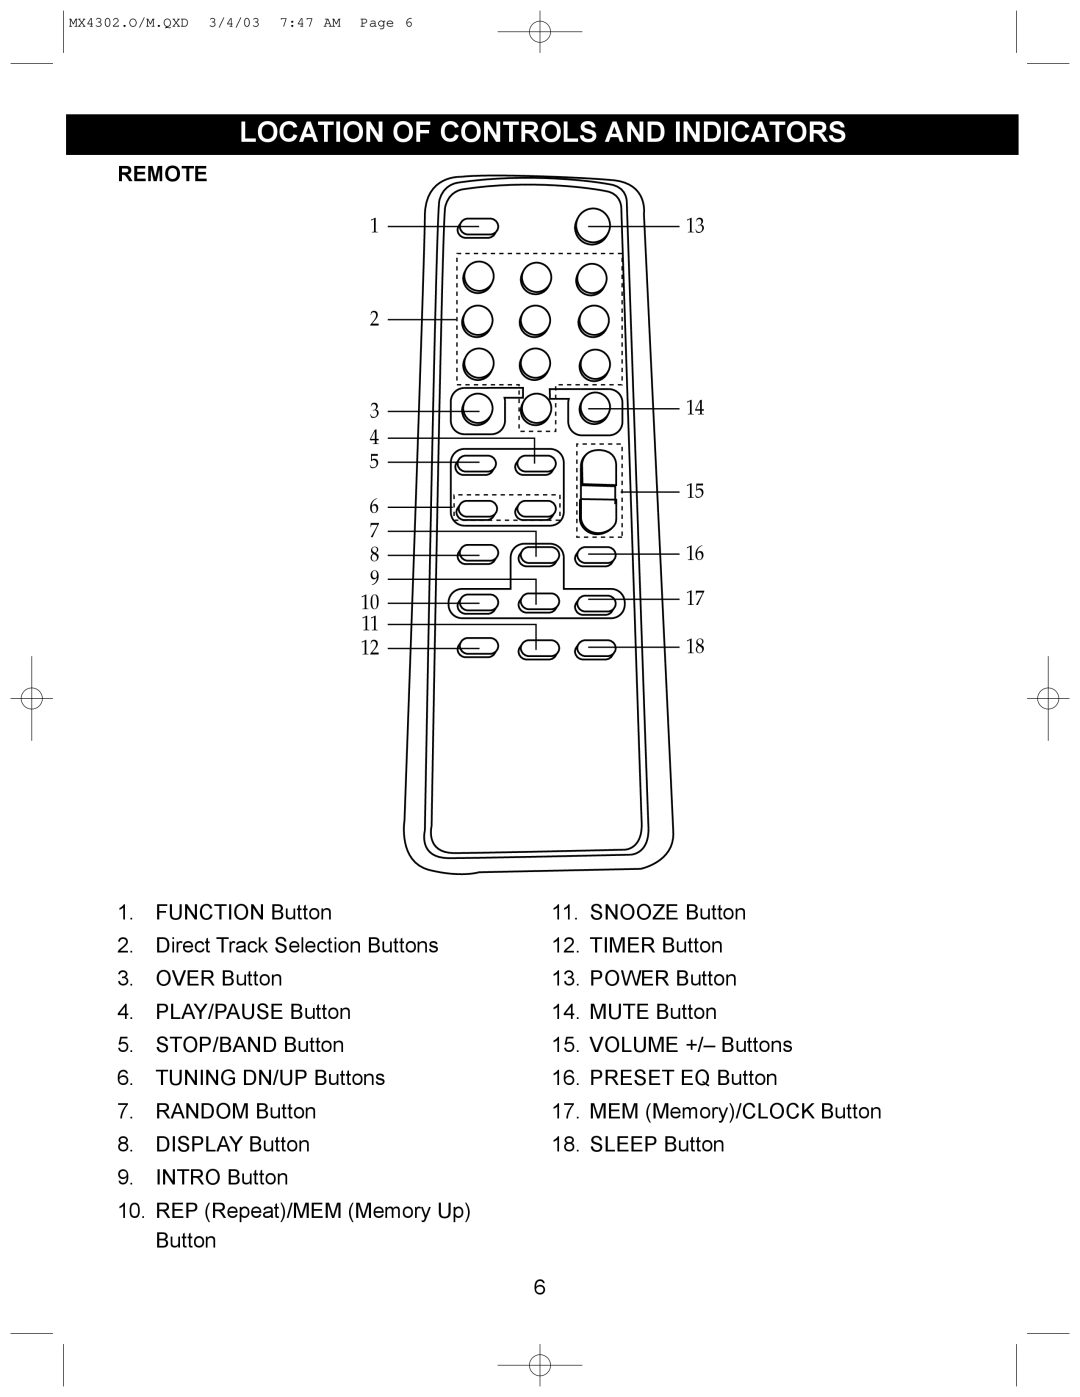 Memorex MX4302 operating instructions Remote, Location Of Controls And Indicators 